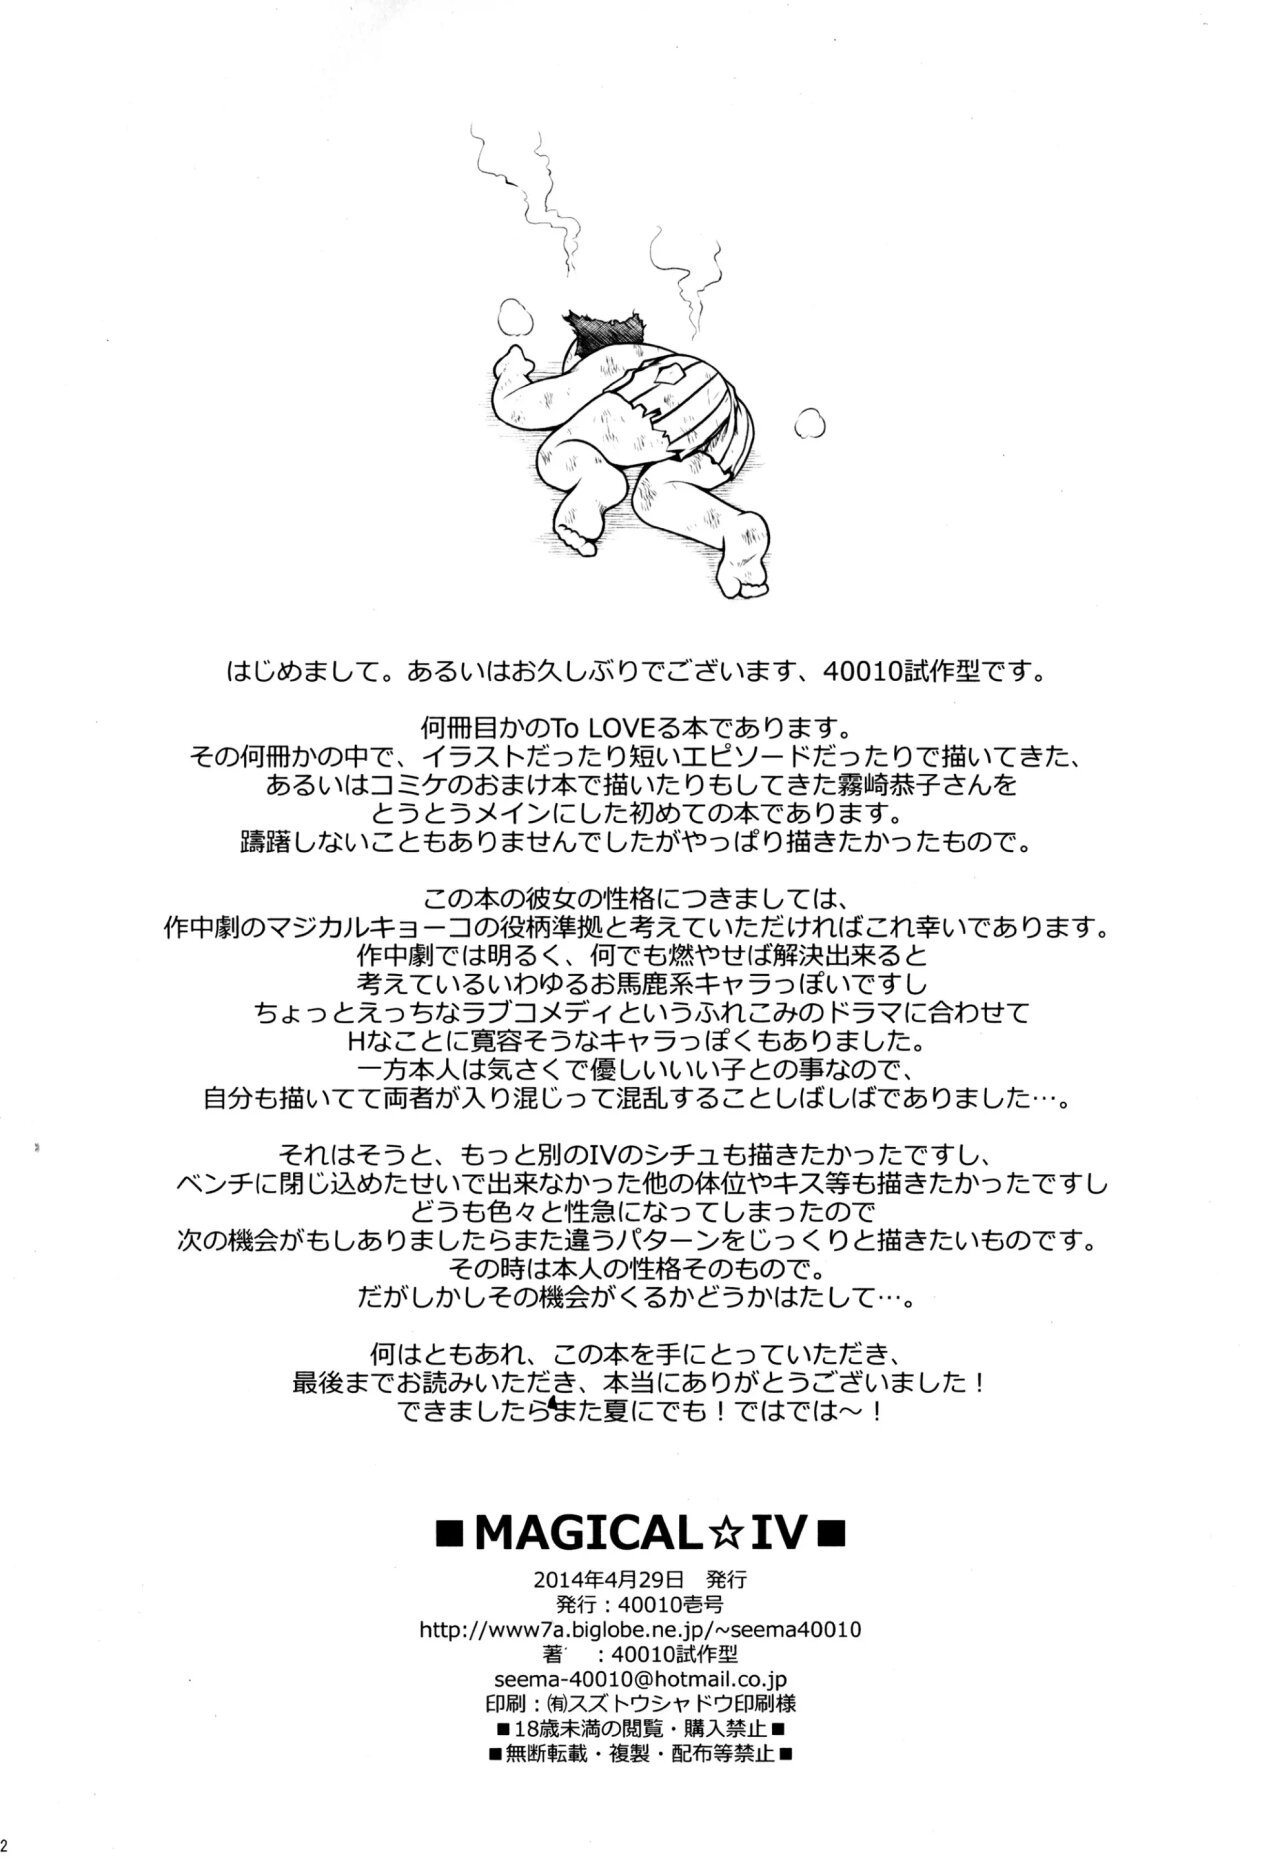 MAGICAL IV - 20